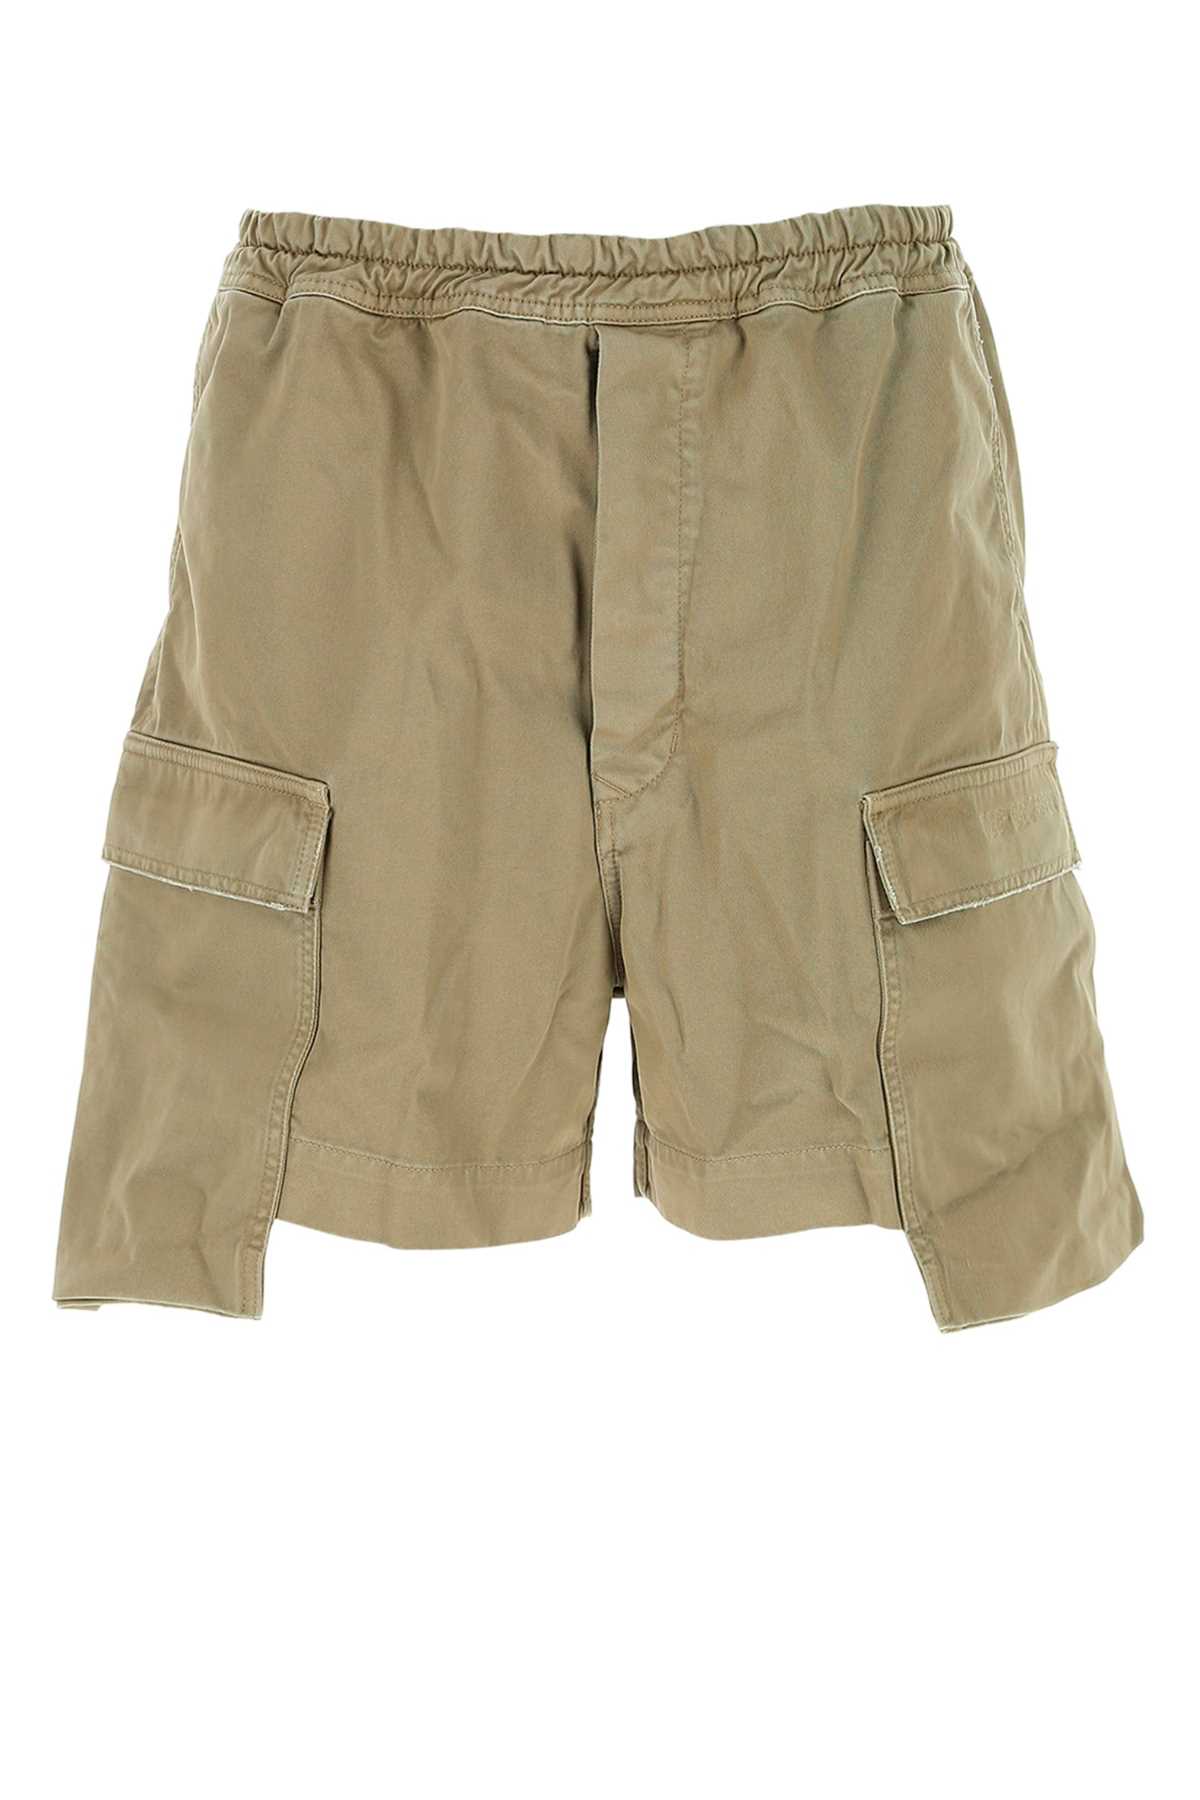 14 Bros Army Green Cotton Scanlon Bermuda Shorts